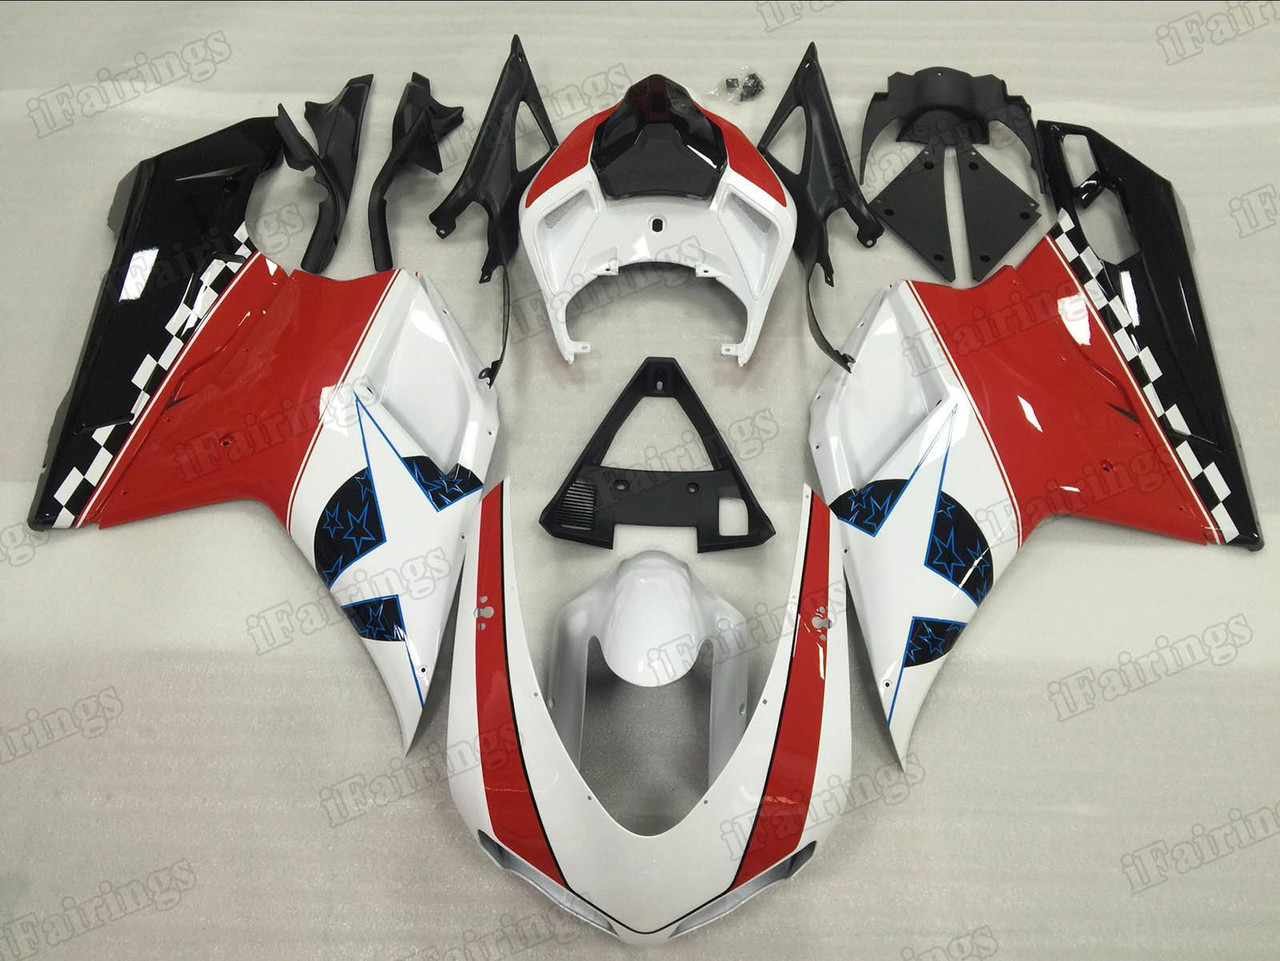 Motorcycle fairings/bodywork for Ducati 848/1098/1198 Nicky Hayden replica scheme.